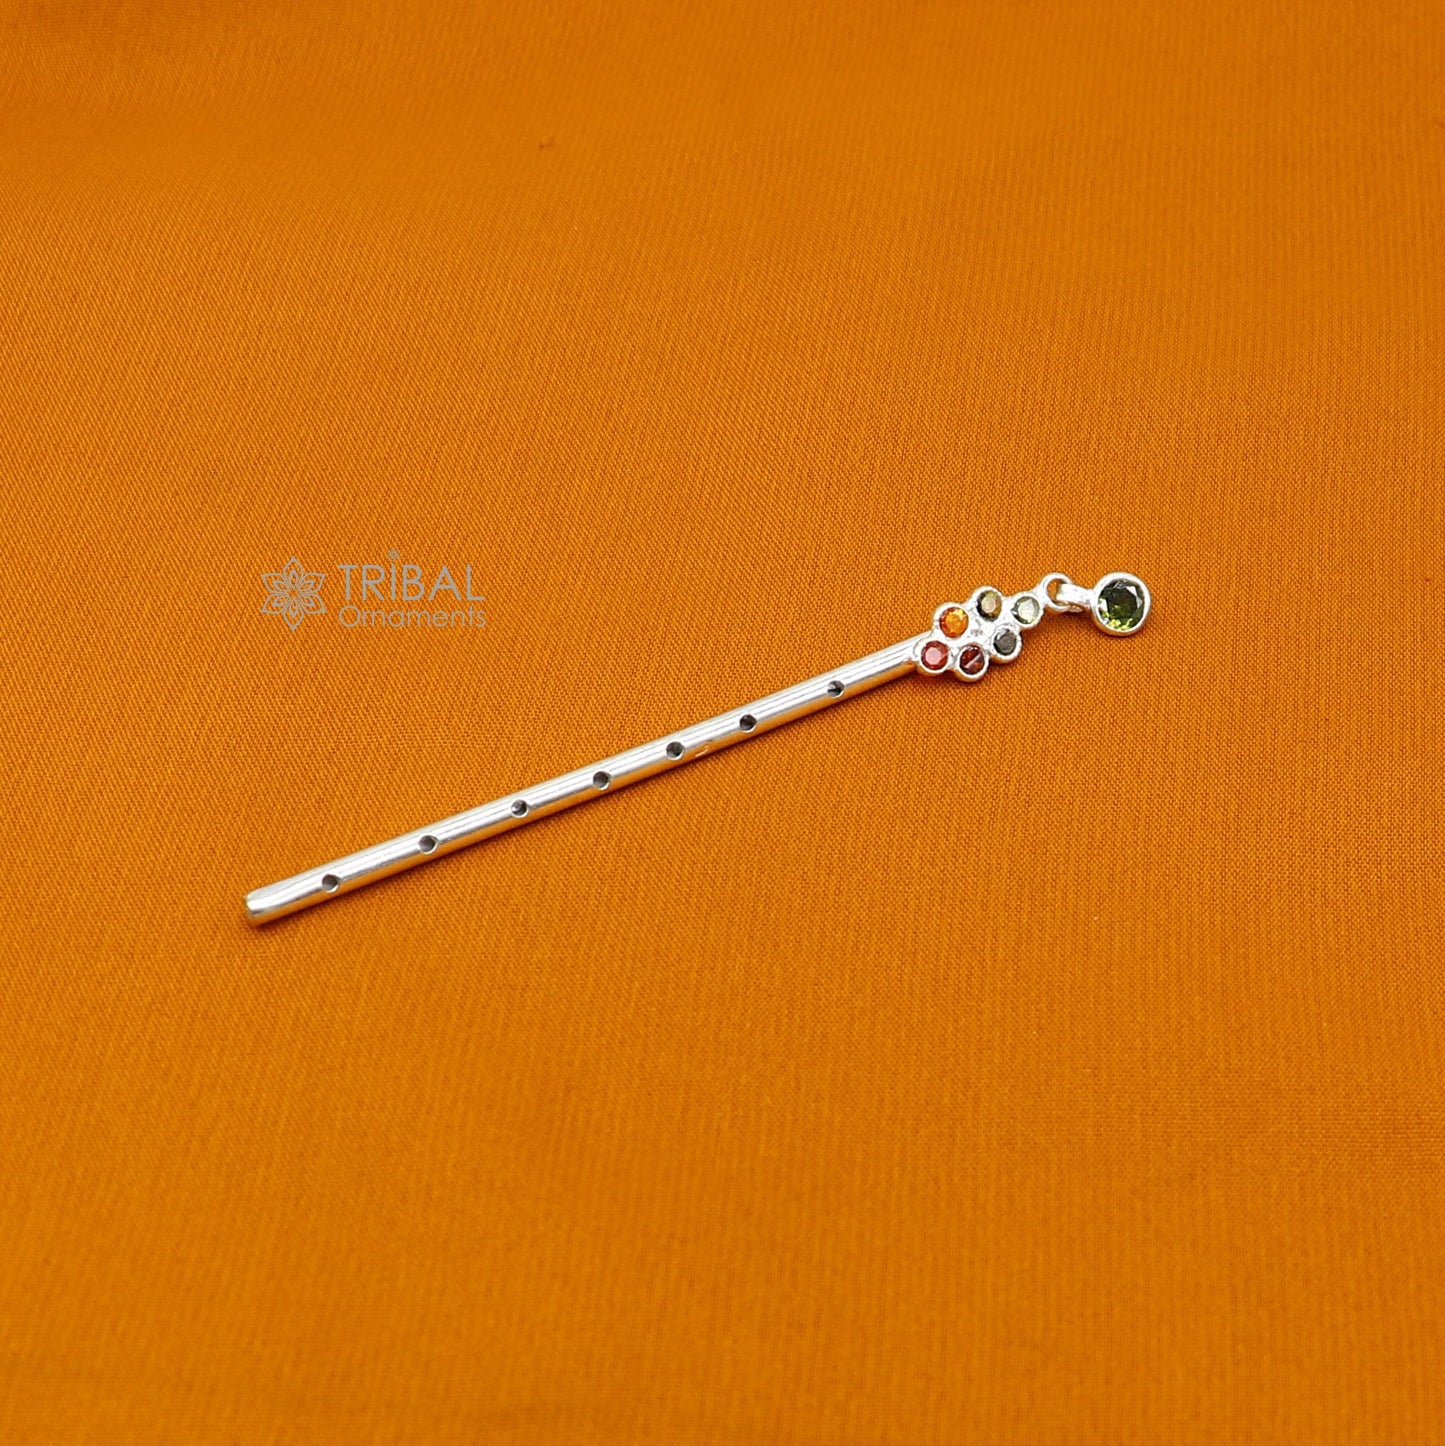 8cm long Flute divine 925 sterling silver handmade stone work design idol Krishna flute, silver bansuri, laddu Gopala flute su1253 - TRIBAL ORNAMENTS